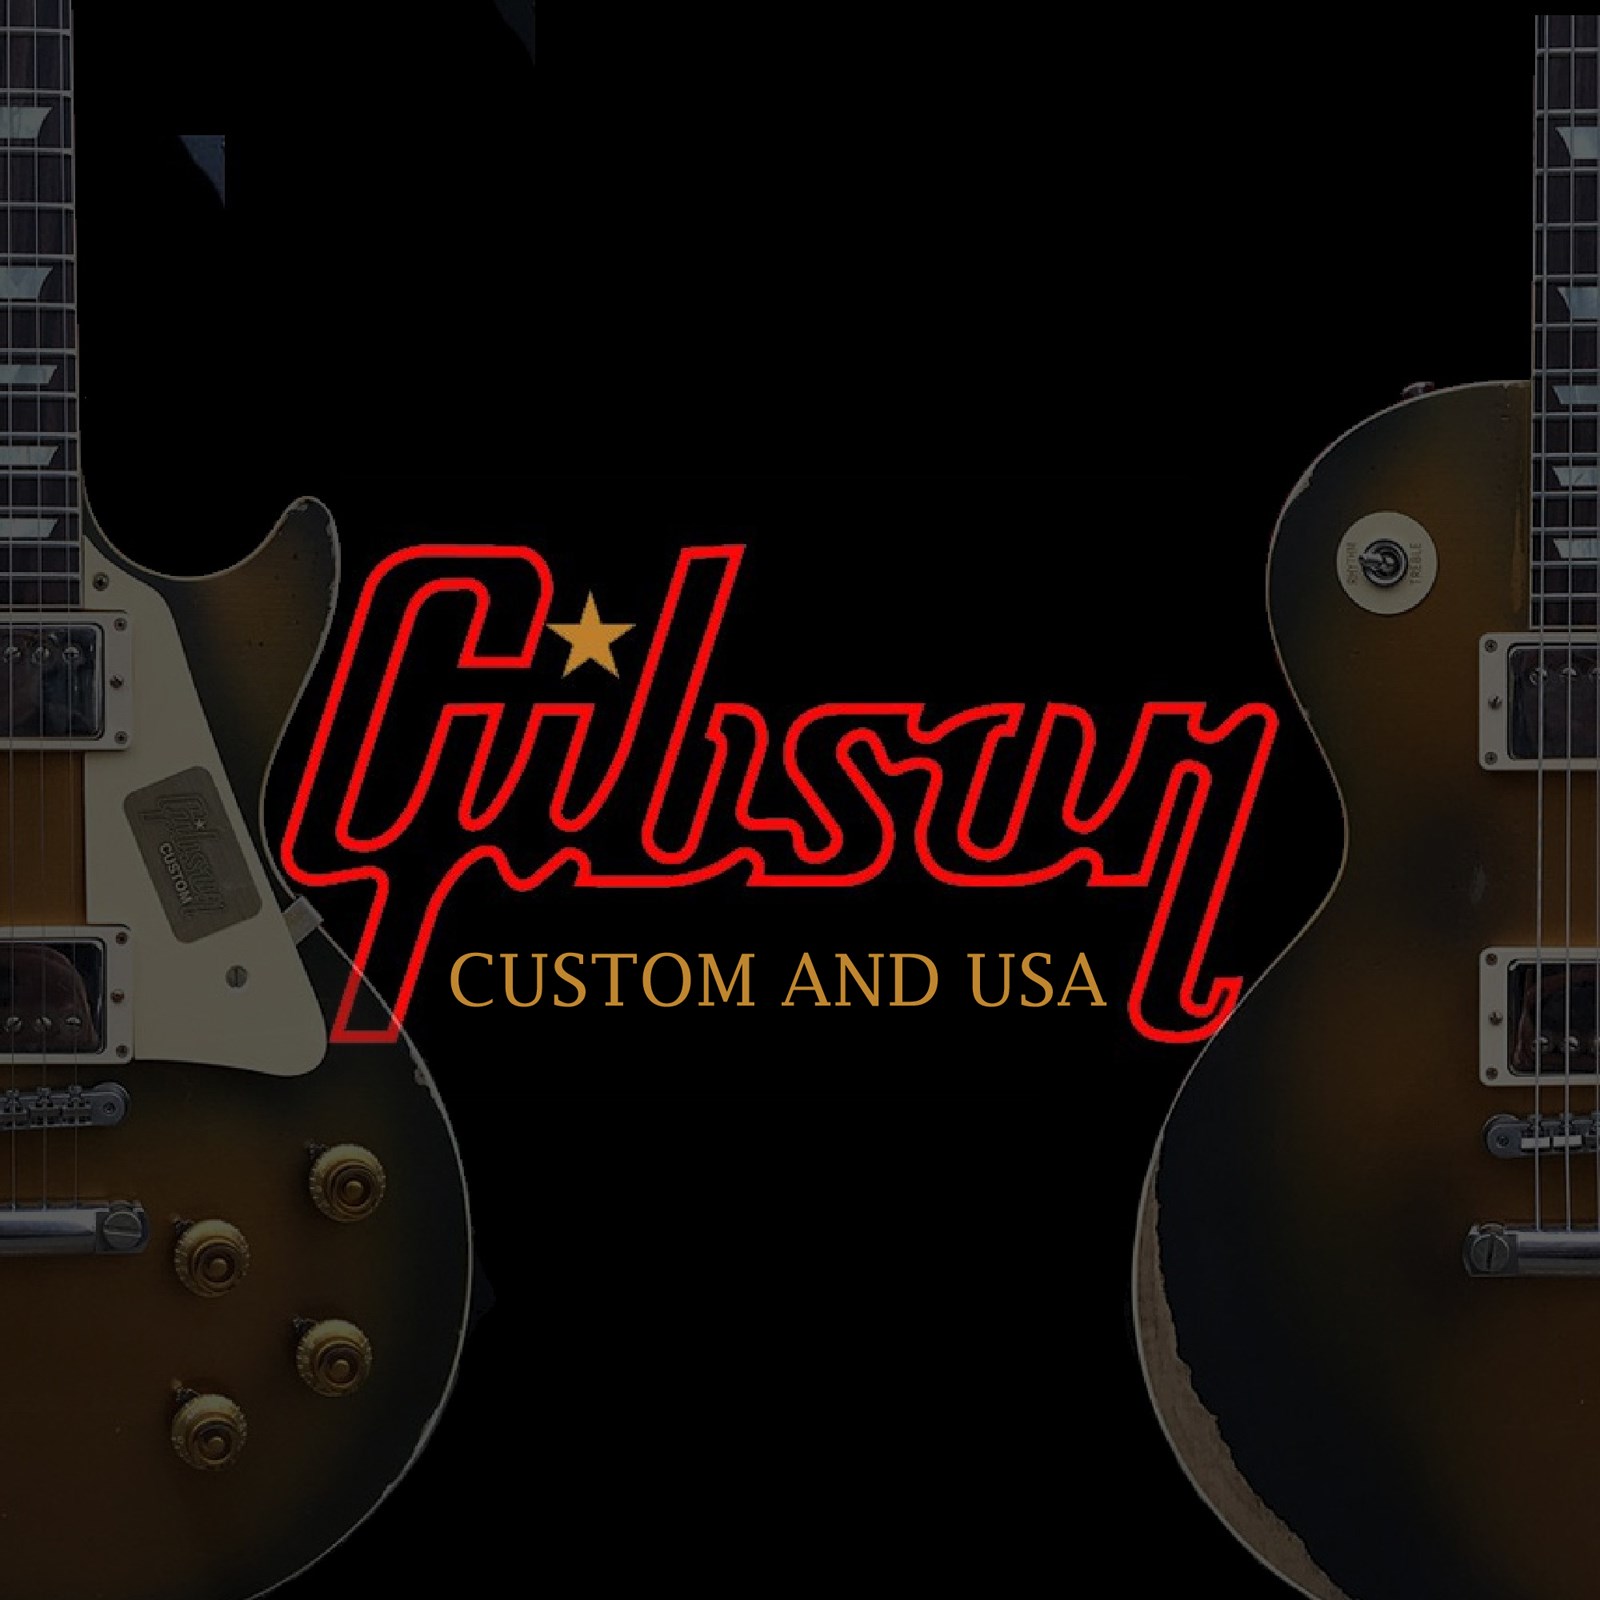 Gibson Electrics